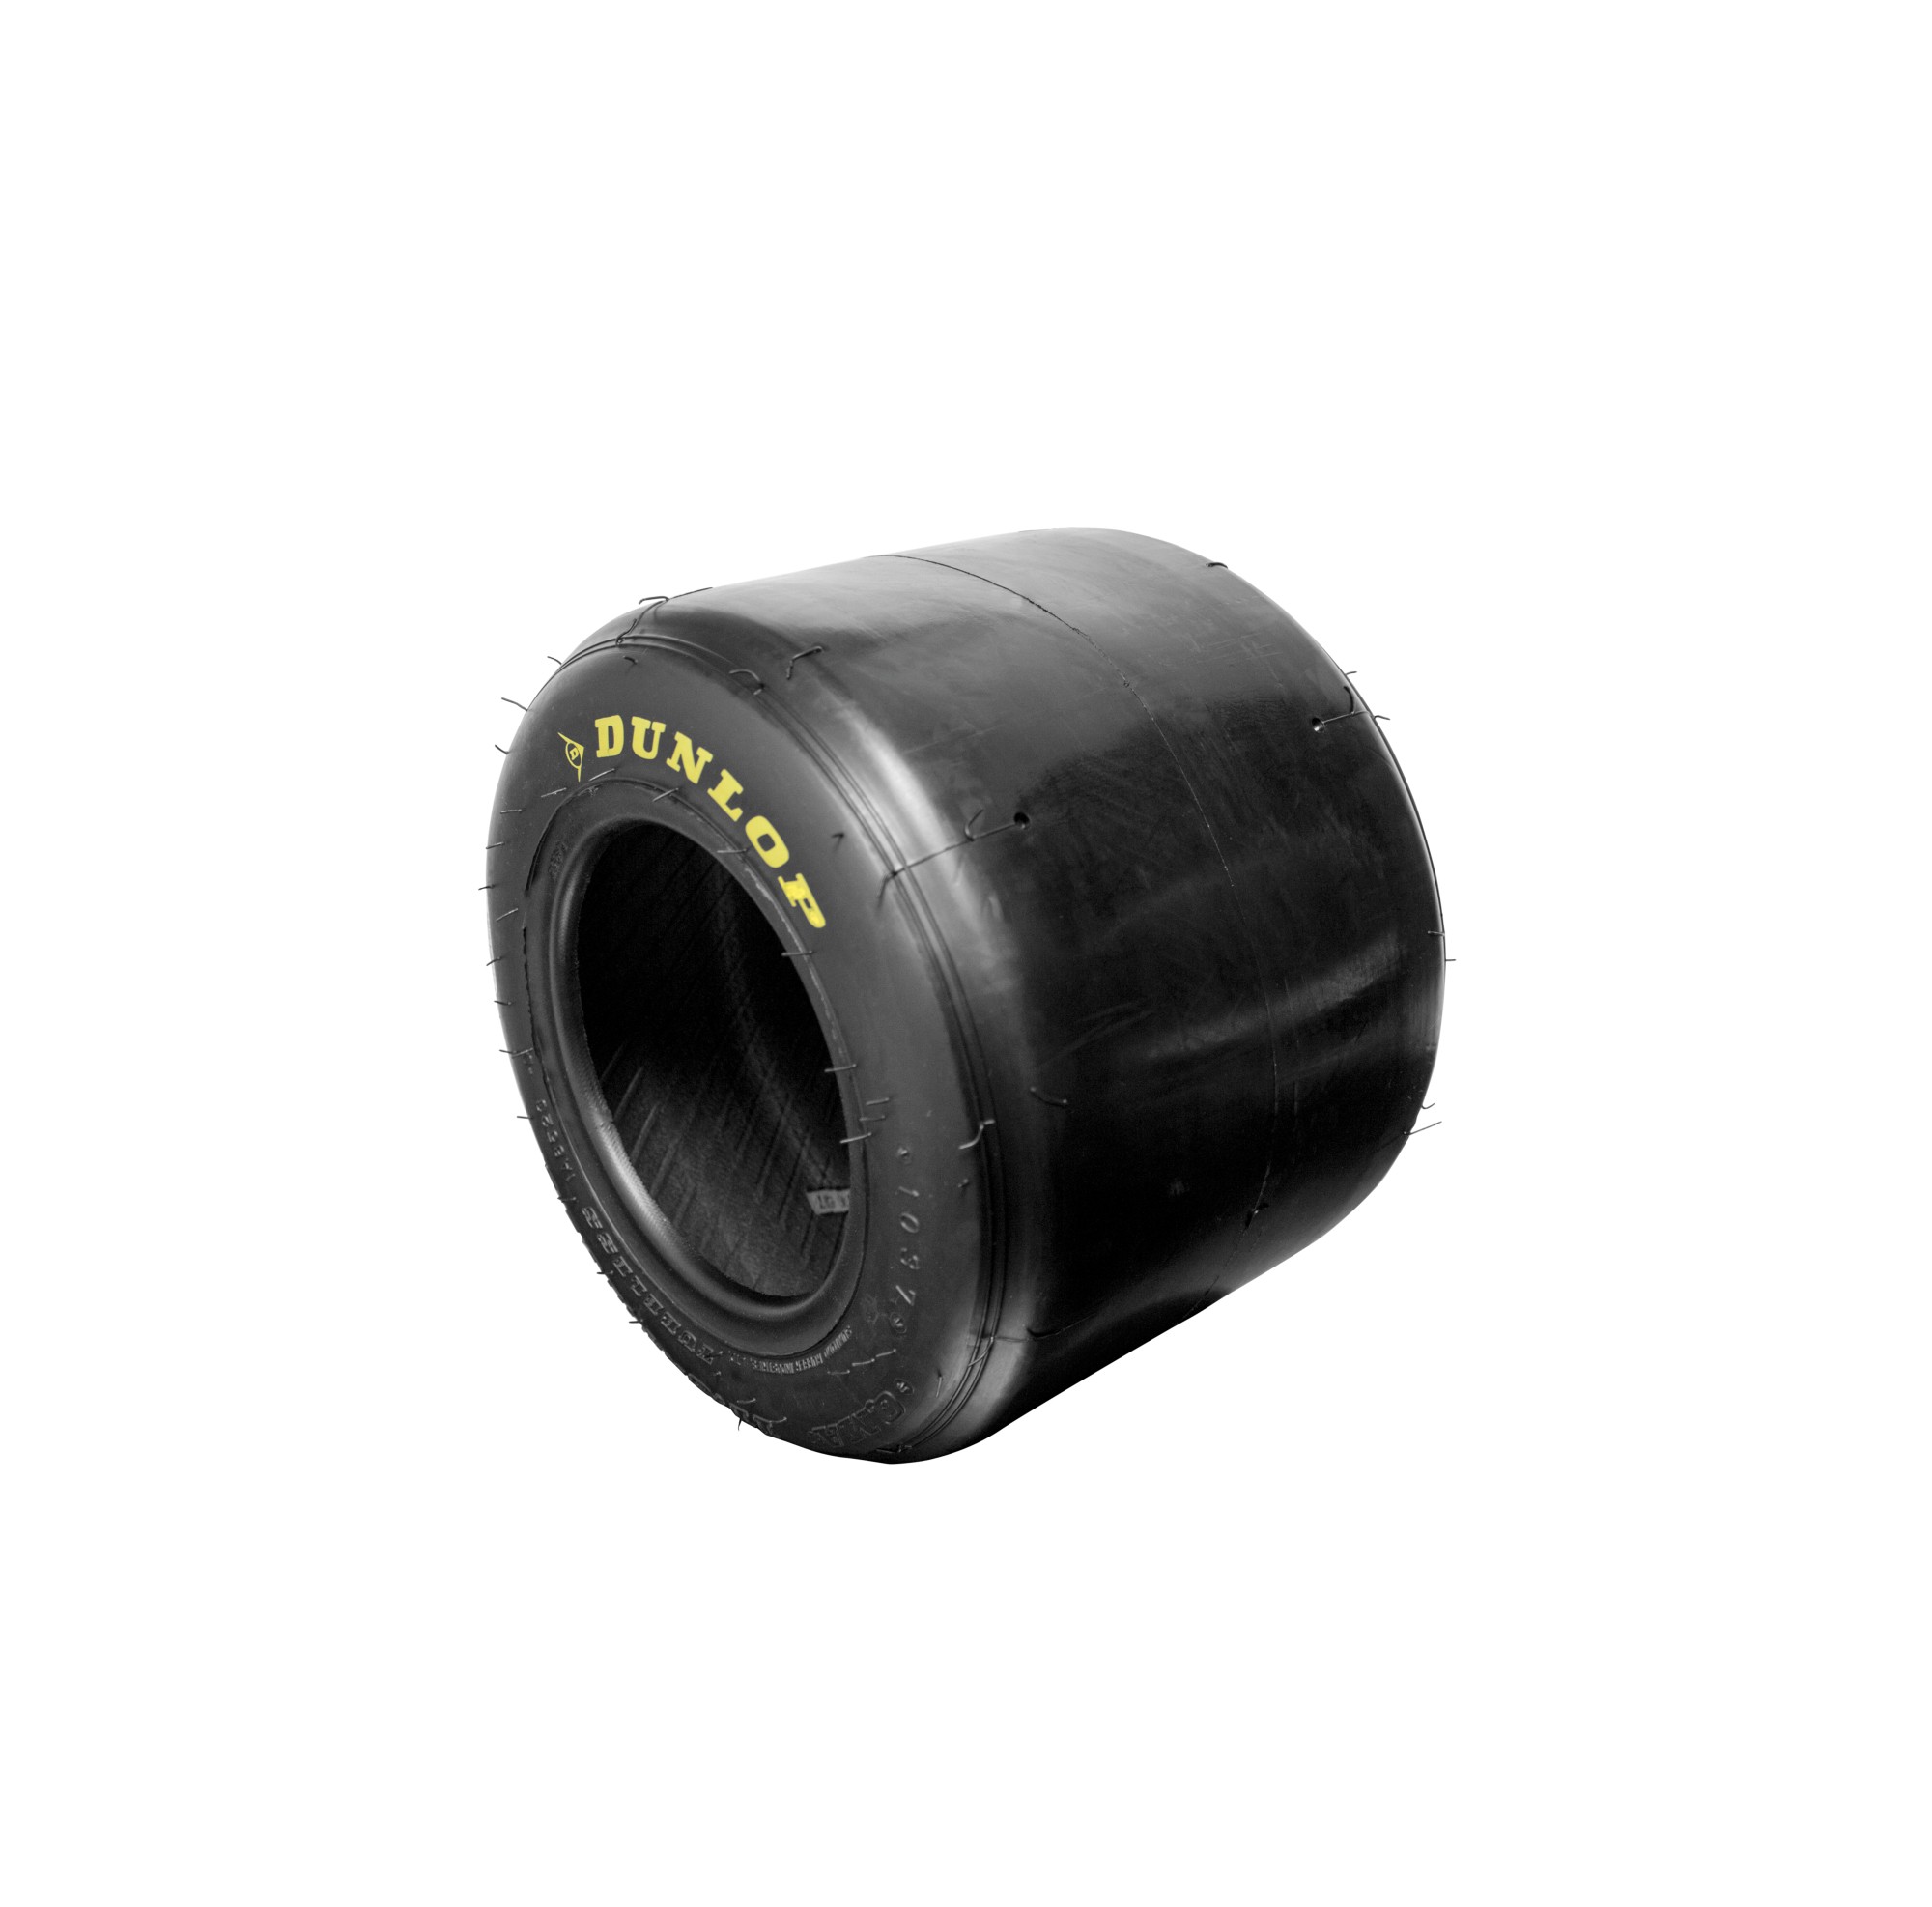 Dunlop Quarter Midget Racing Tire 11.5-7.10-6 Slick